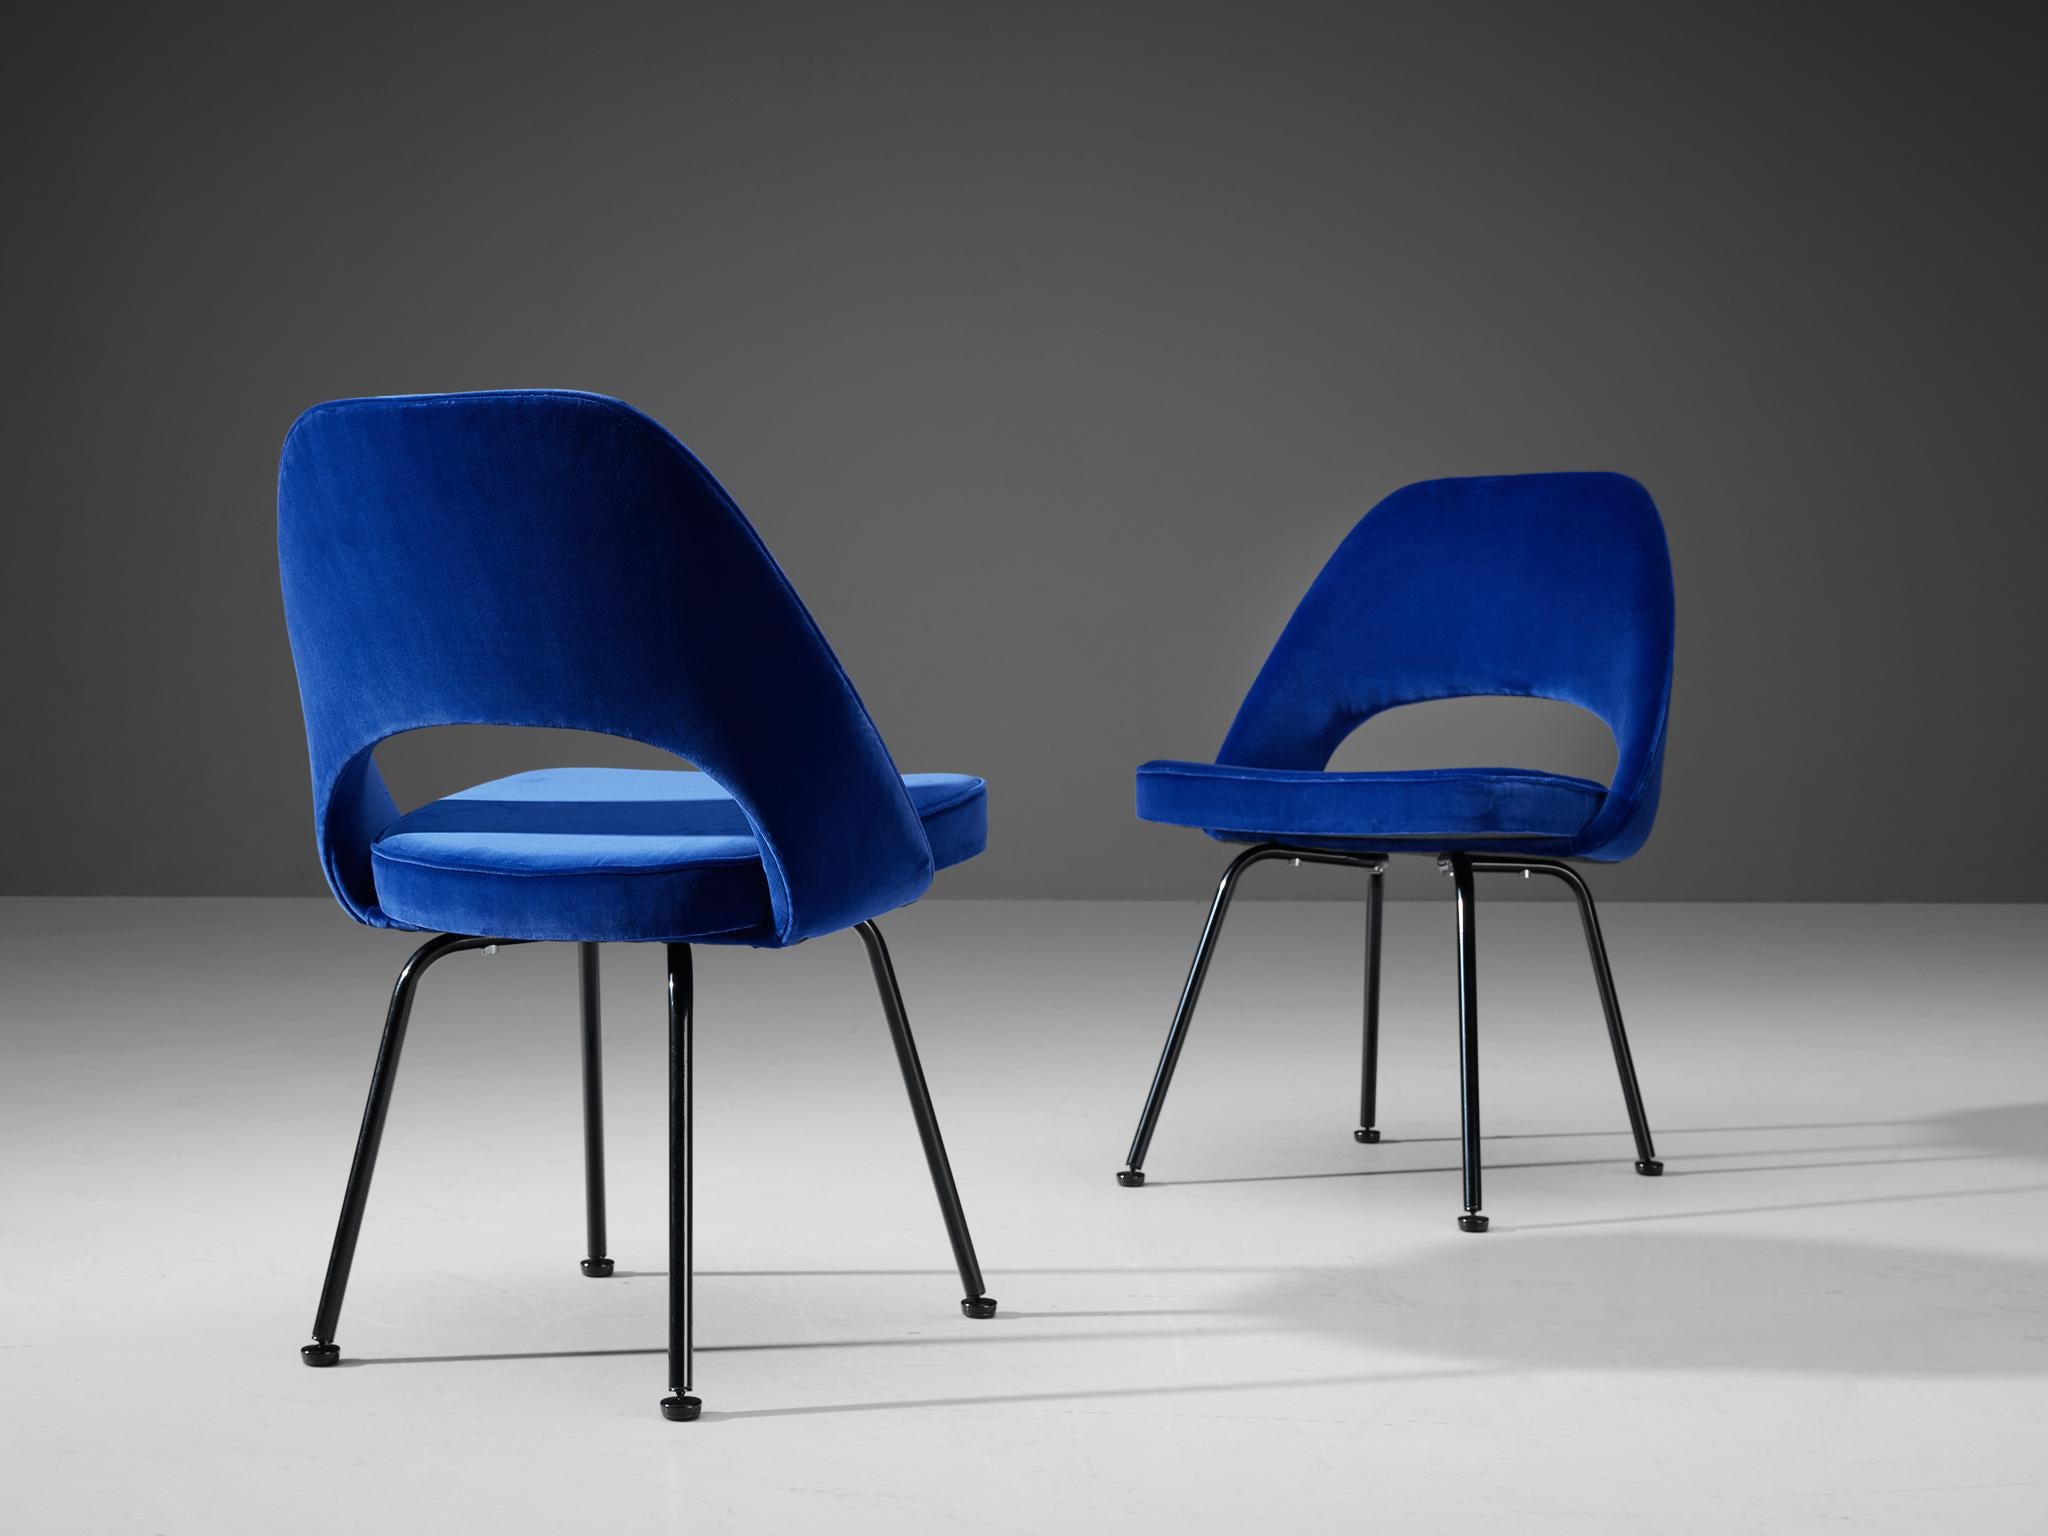 Late 20th Century Eero Saarinen for Knoll Pair of Dining Chairs in Lapis Lazuli Velvet Upholstery